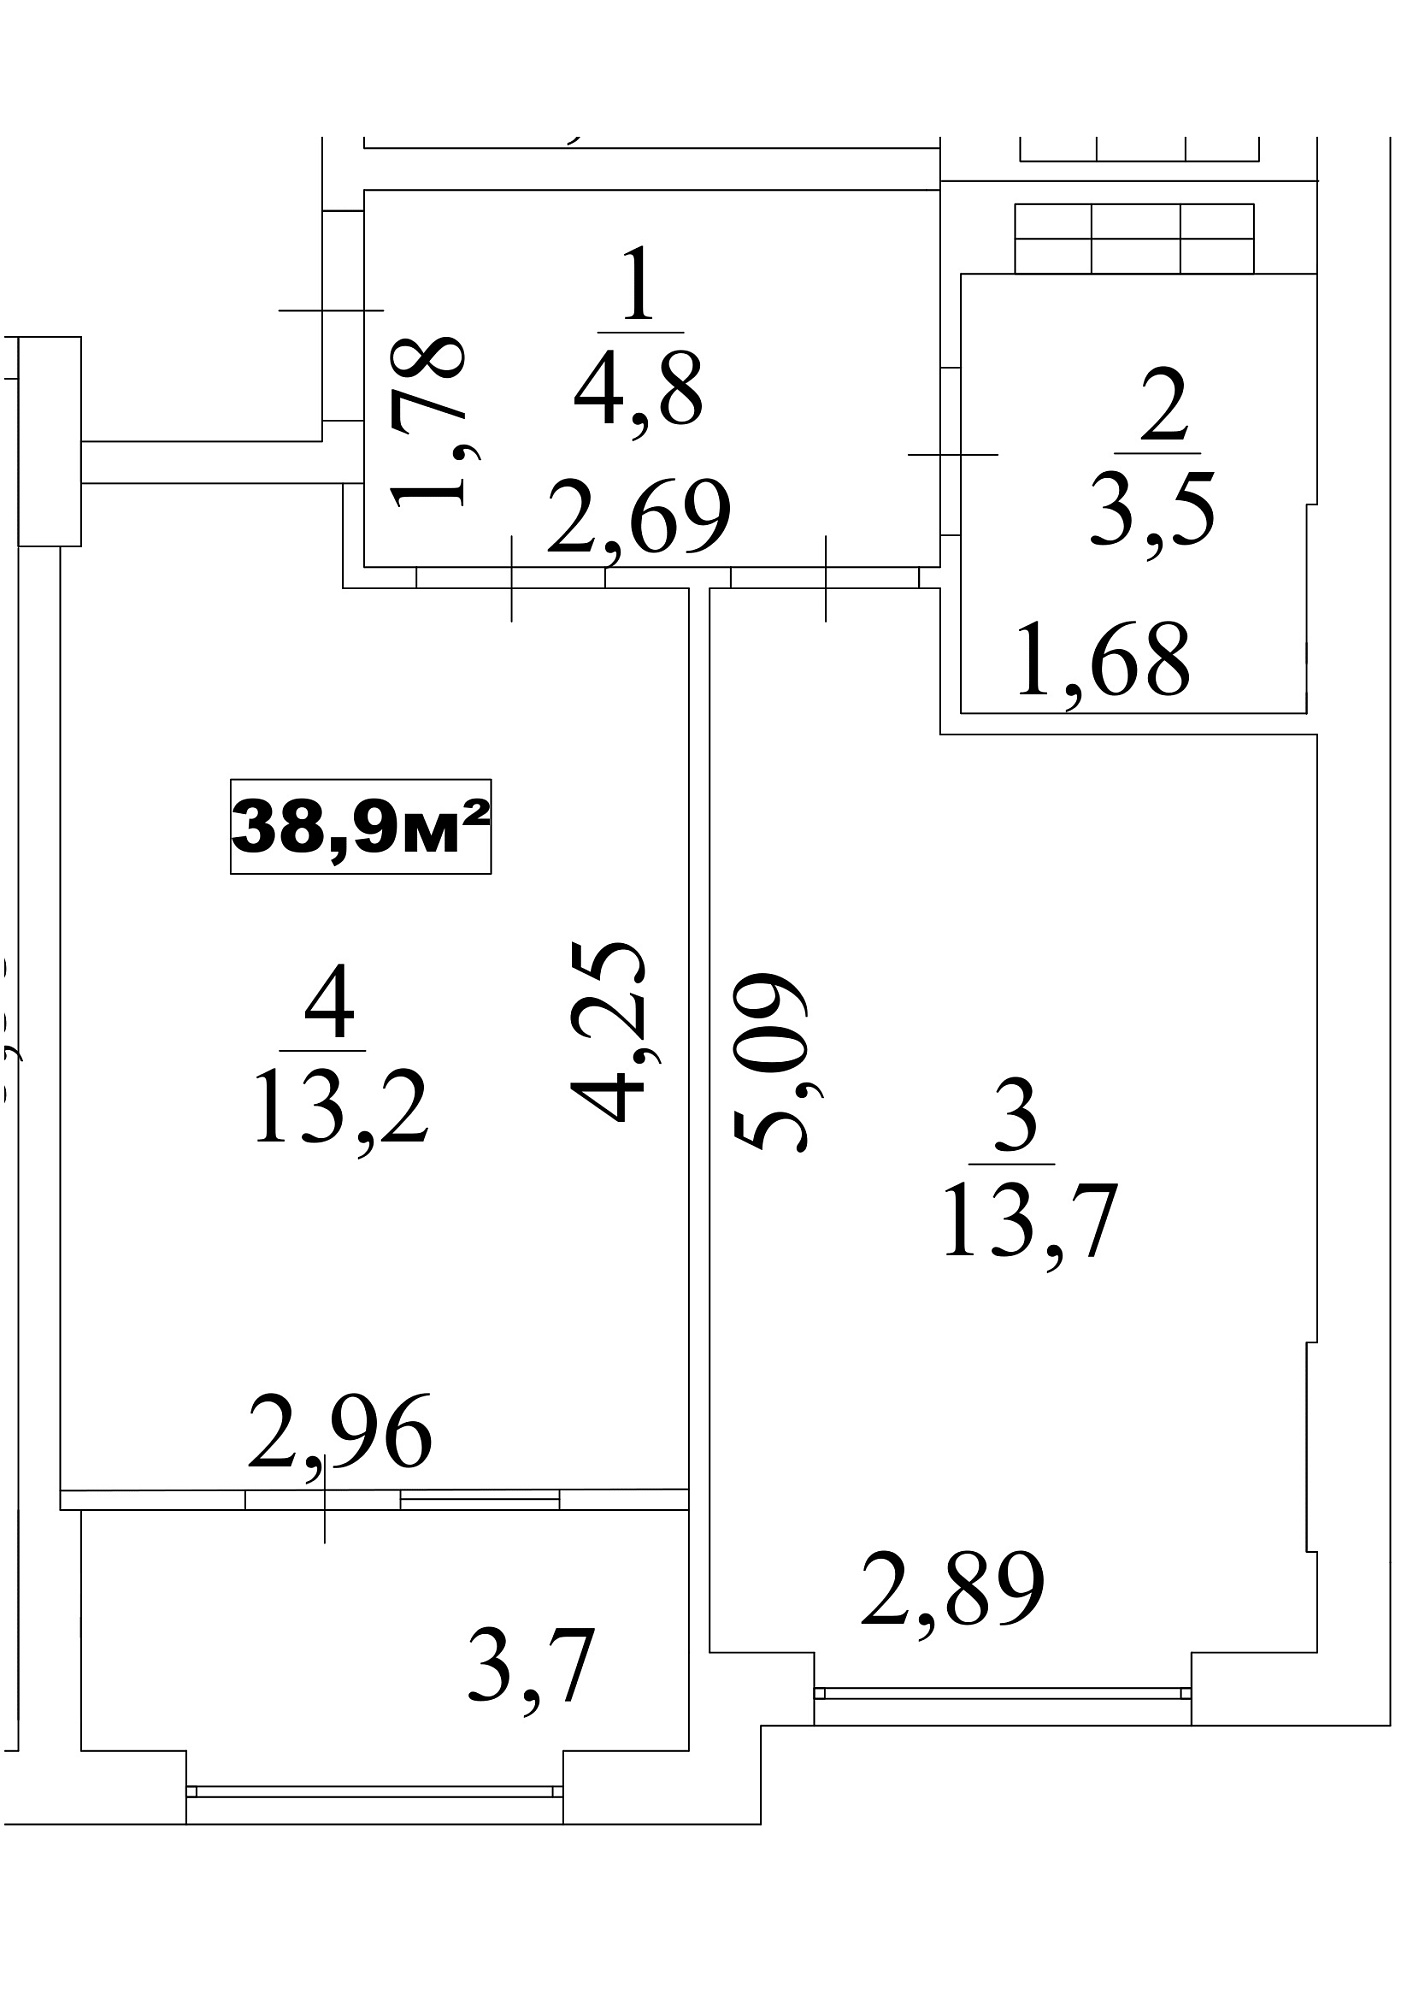 Planning 1-rm flats area 38.9m2, AB-10-05/0043в.